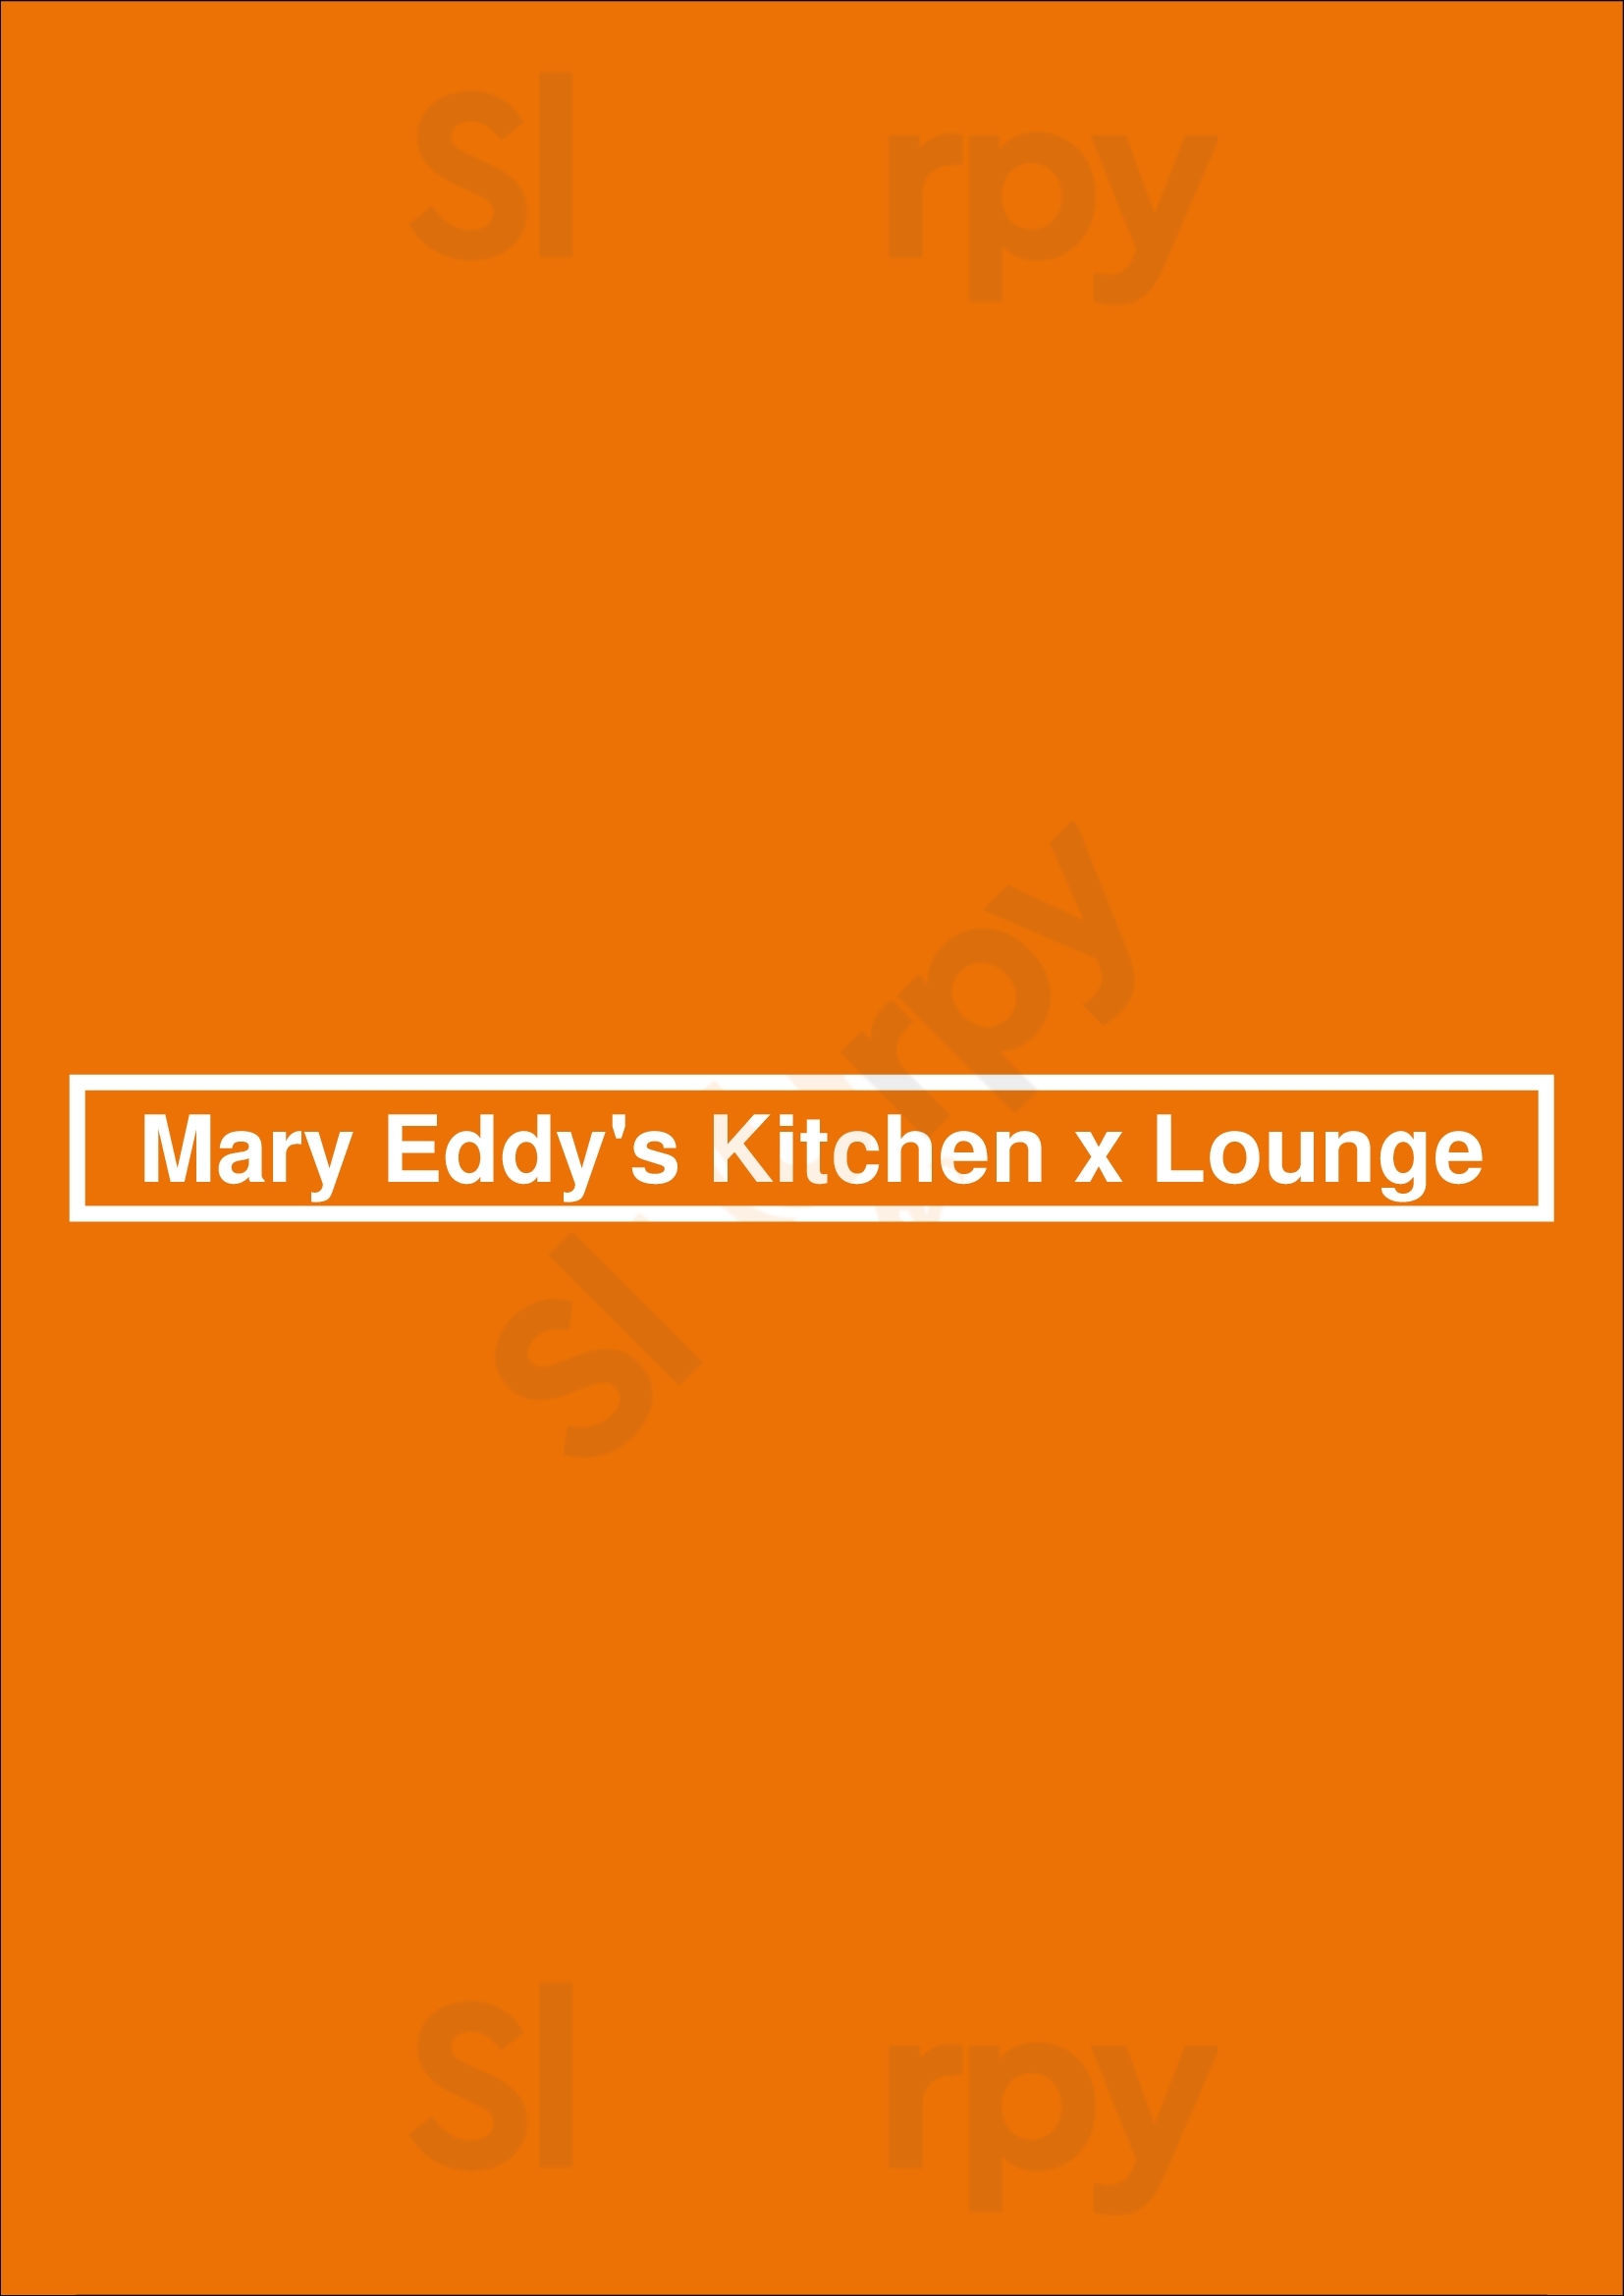 Mary Eddy's Dining Room Oklahoma City Menu - 1